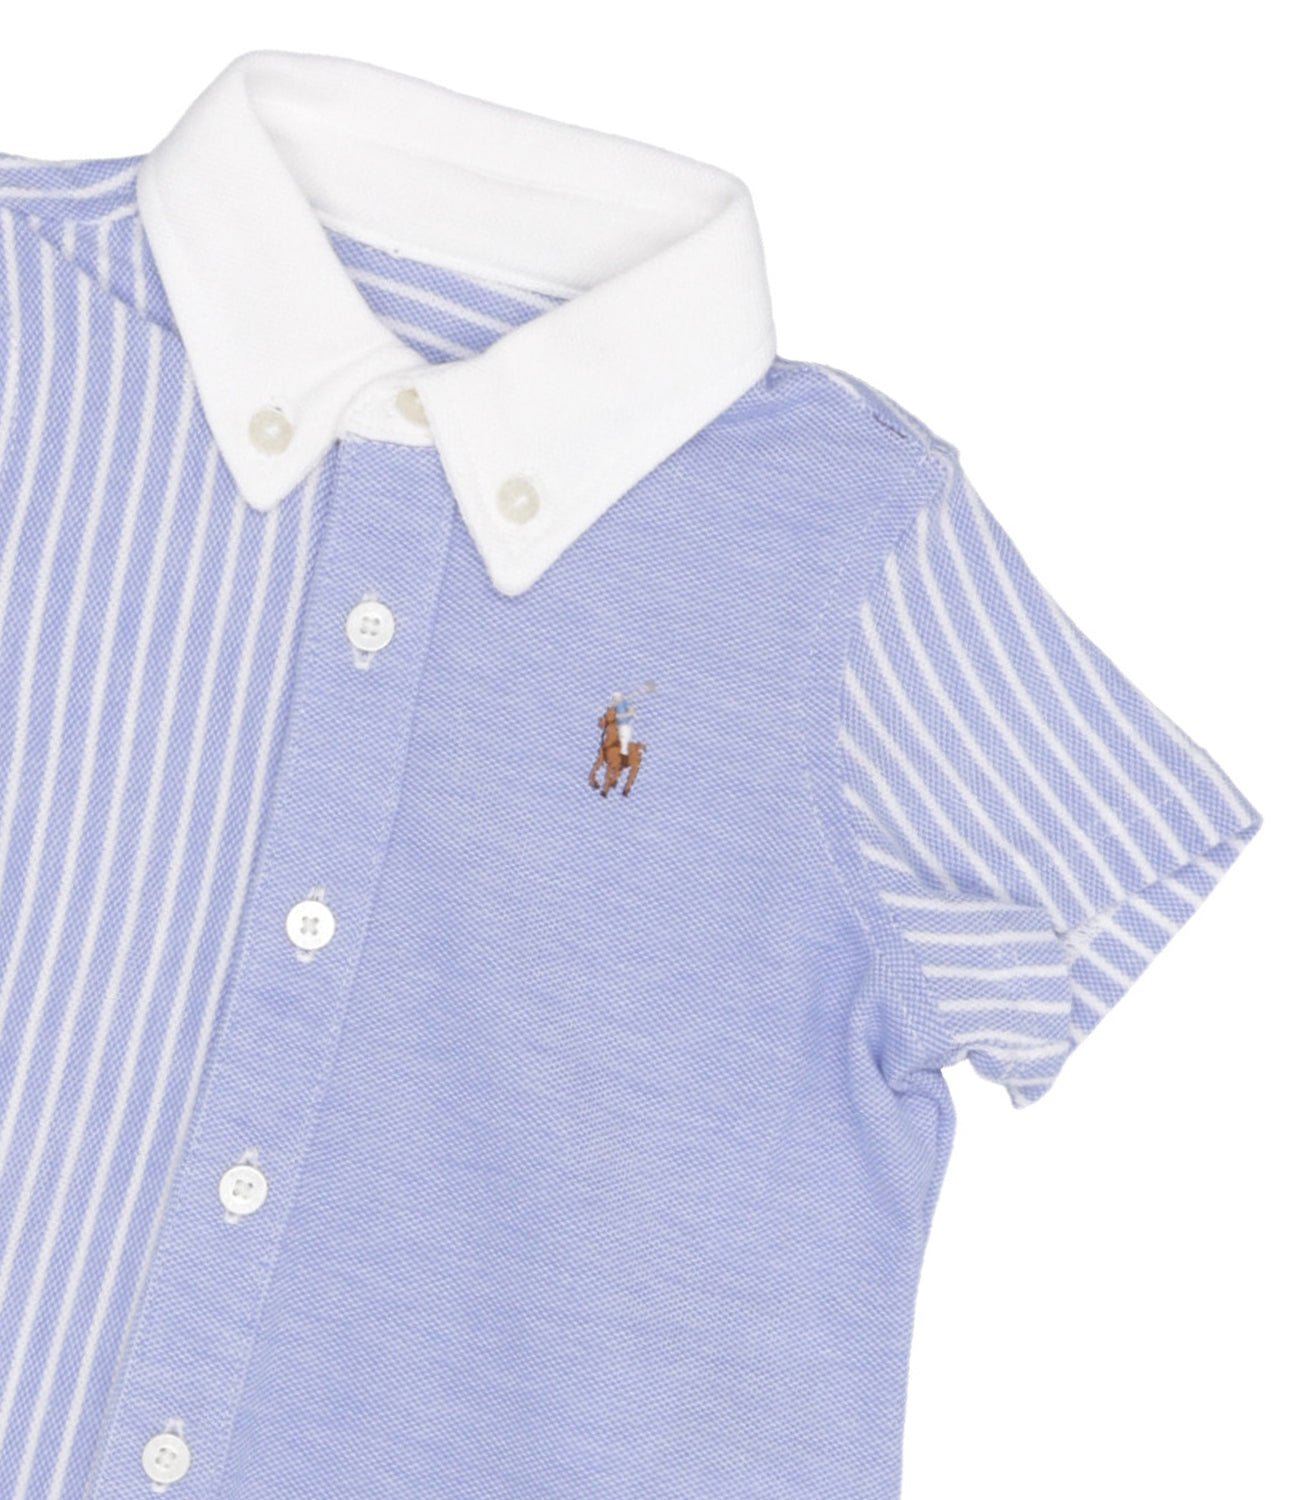 Ralph Lauren Childrenswear | Light Blue and White Sleepsuit